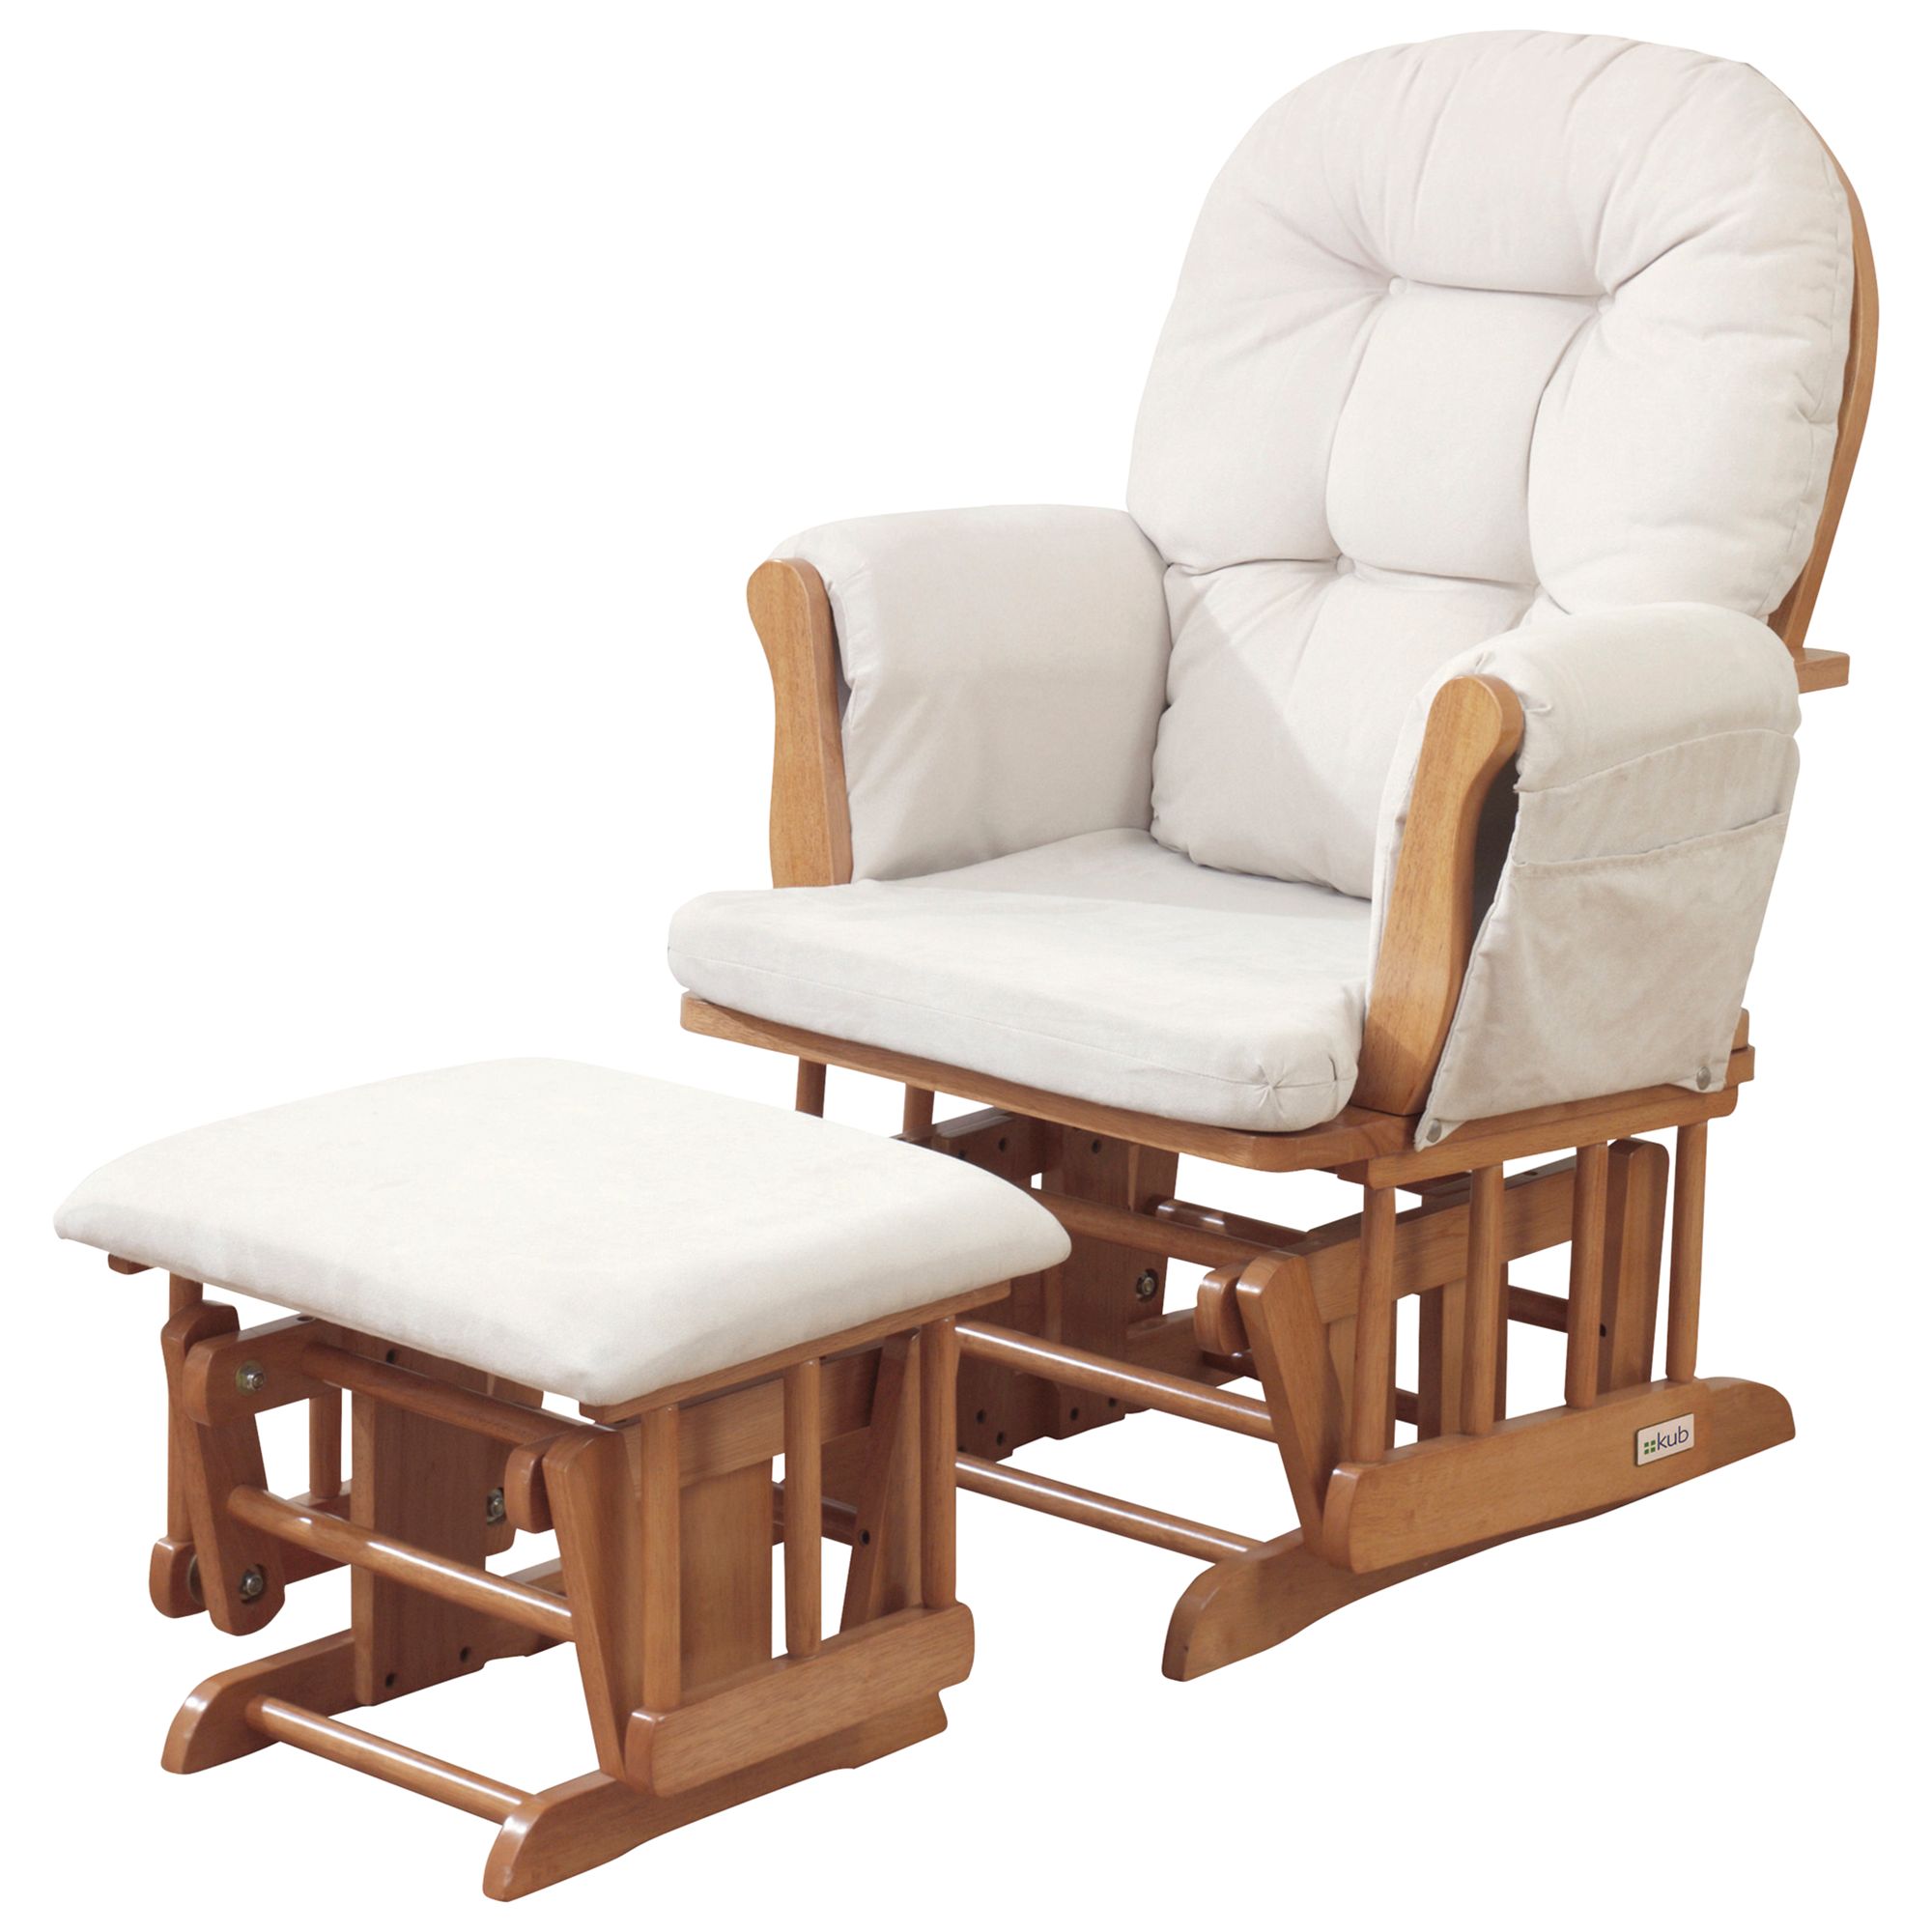 Kub Haywood Glider Nursing Chair and Footstool, Natural at John Lewis